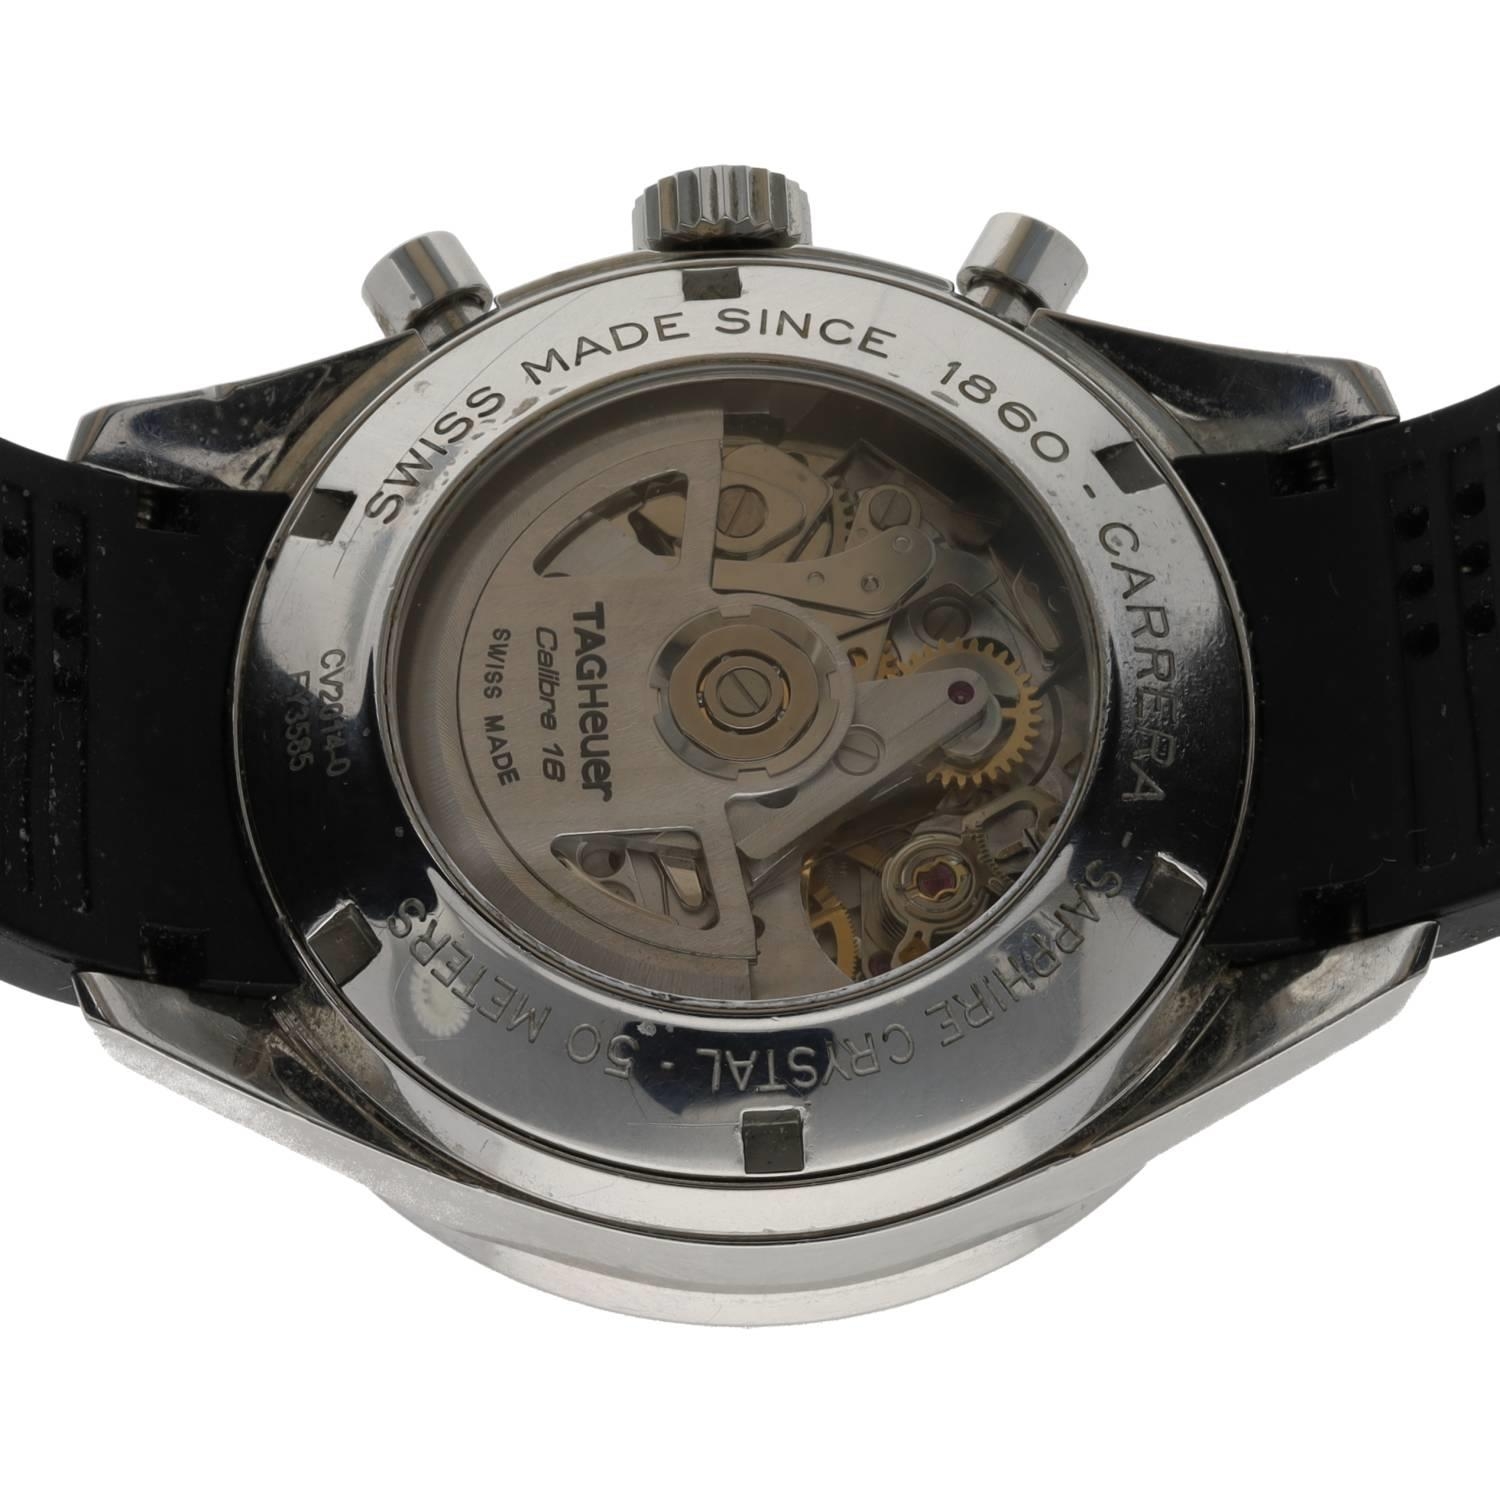 Tag Heuer Carrera Chronograph automatic stainless steel gentleman's wristwatch, ref. CV2014-0, - Bild 2 aus 2